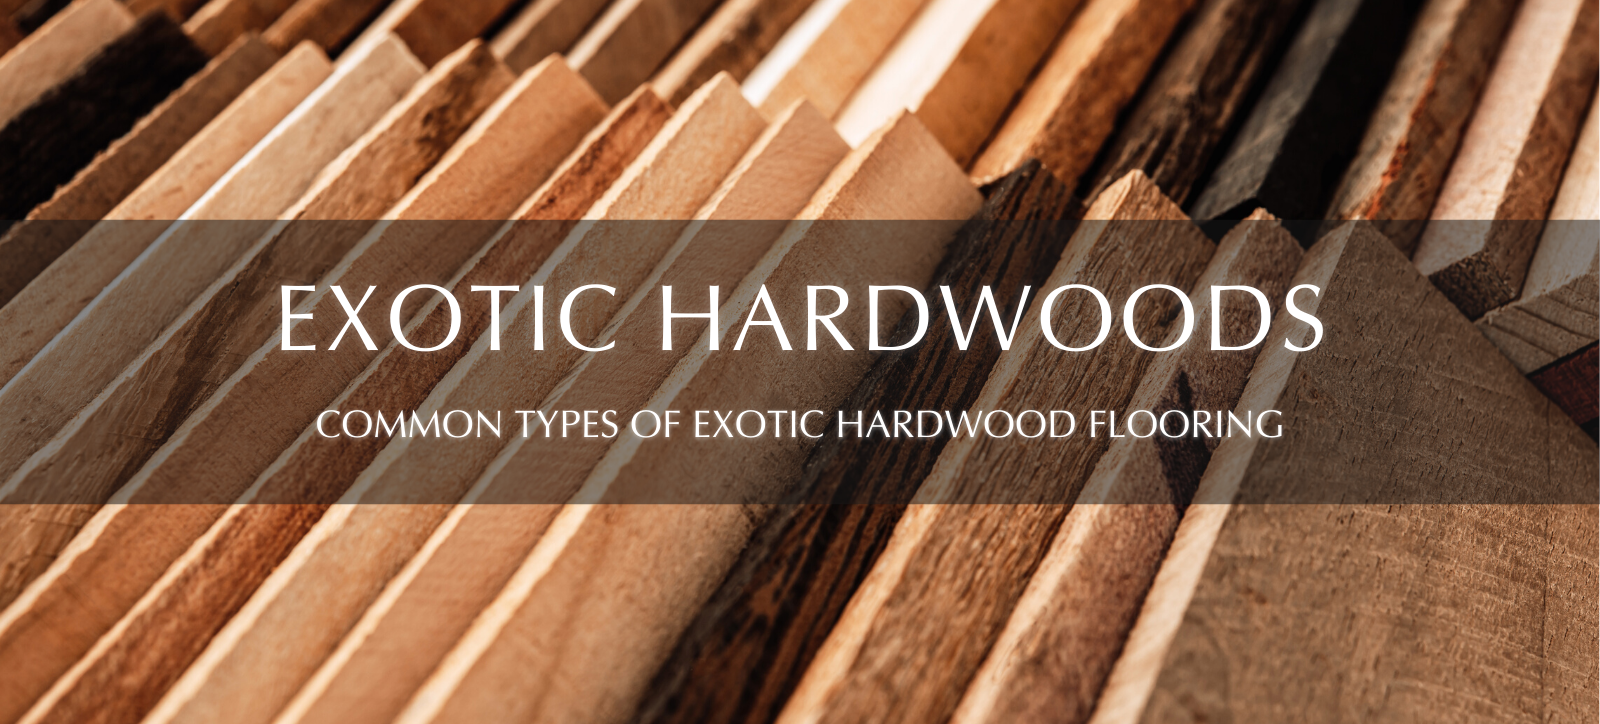 Blog Banner - Types of Exotic Hardwood Flooring - Garrison Collection Smaller